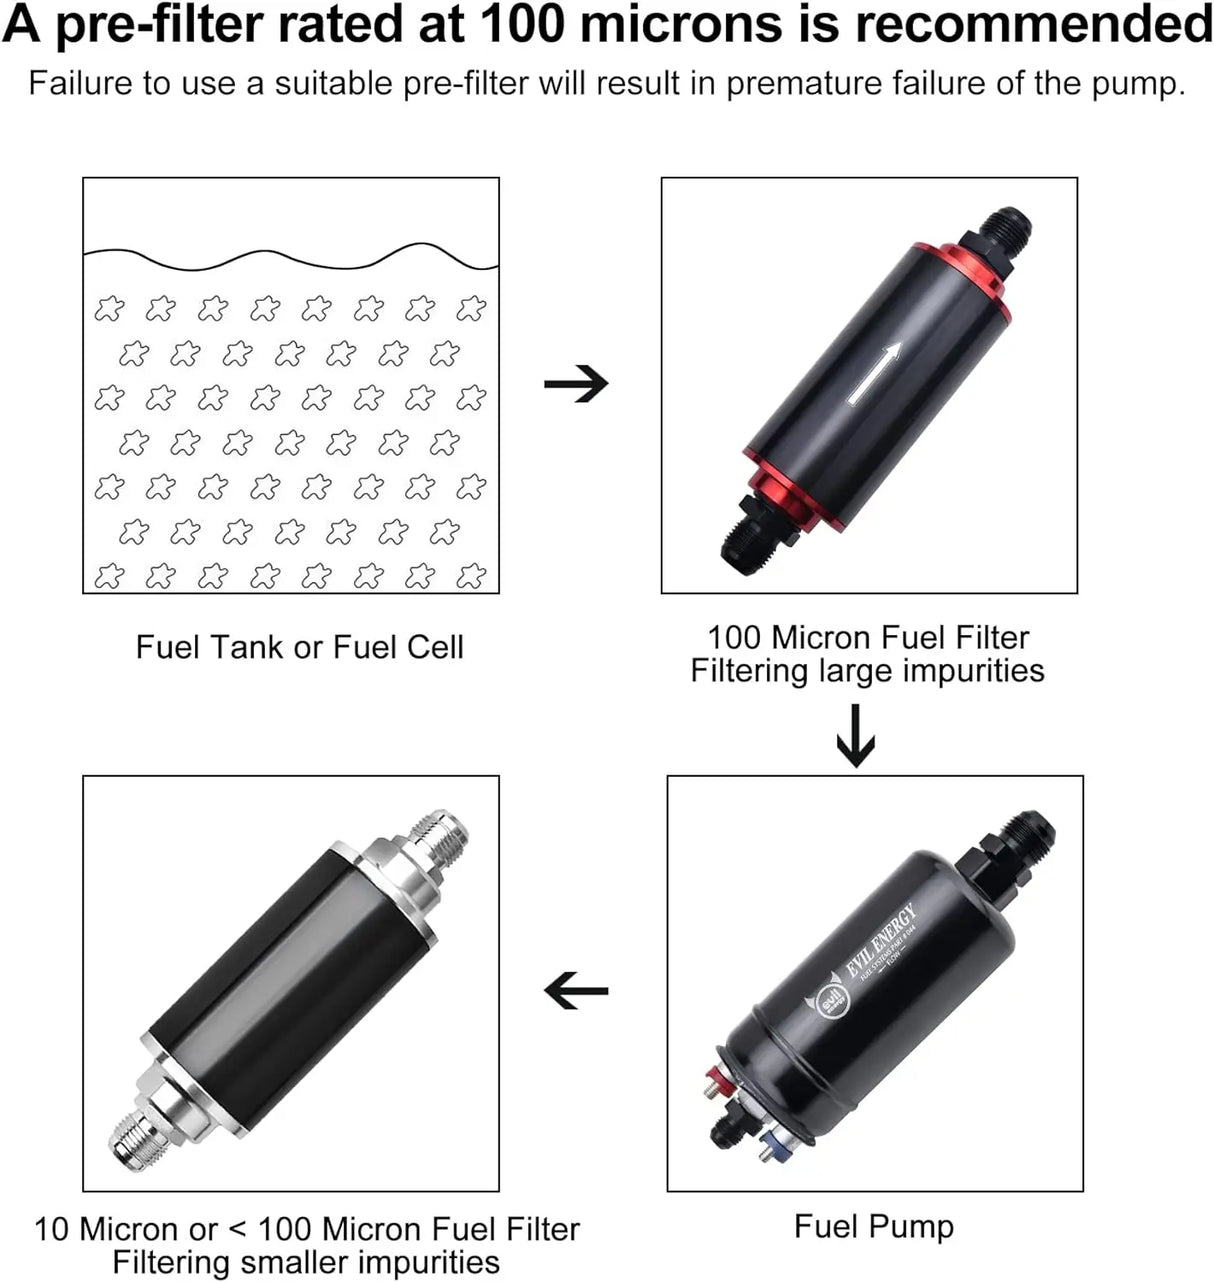 EVIL ENERGY 12V Electric Universal External Inline Fuel Pump Kit –  EVILENERGY